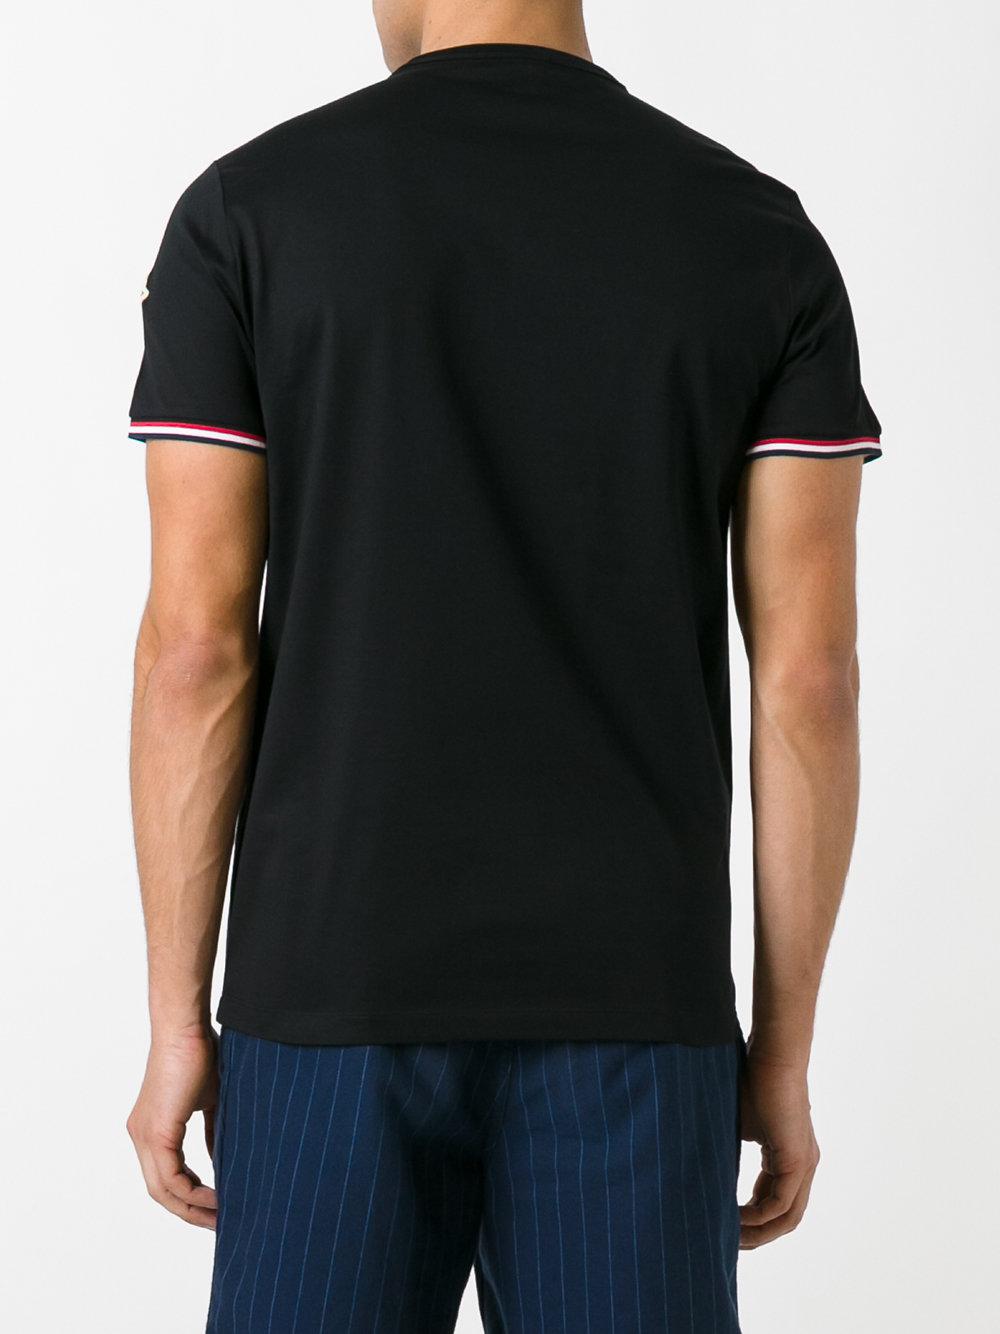 Lyst - Moncler Classic Short Sleeve T-shirt in Black for Men